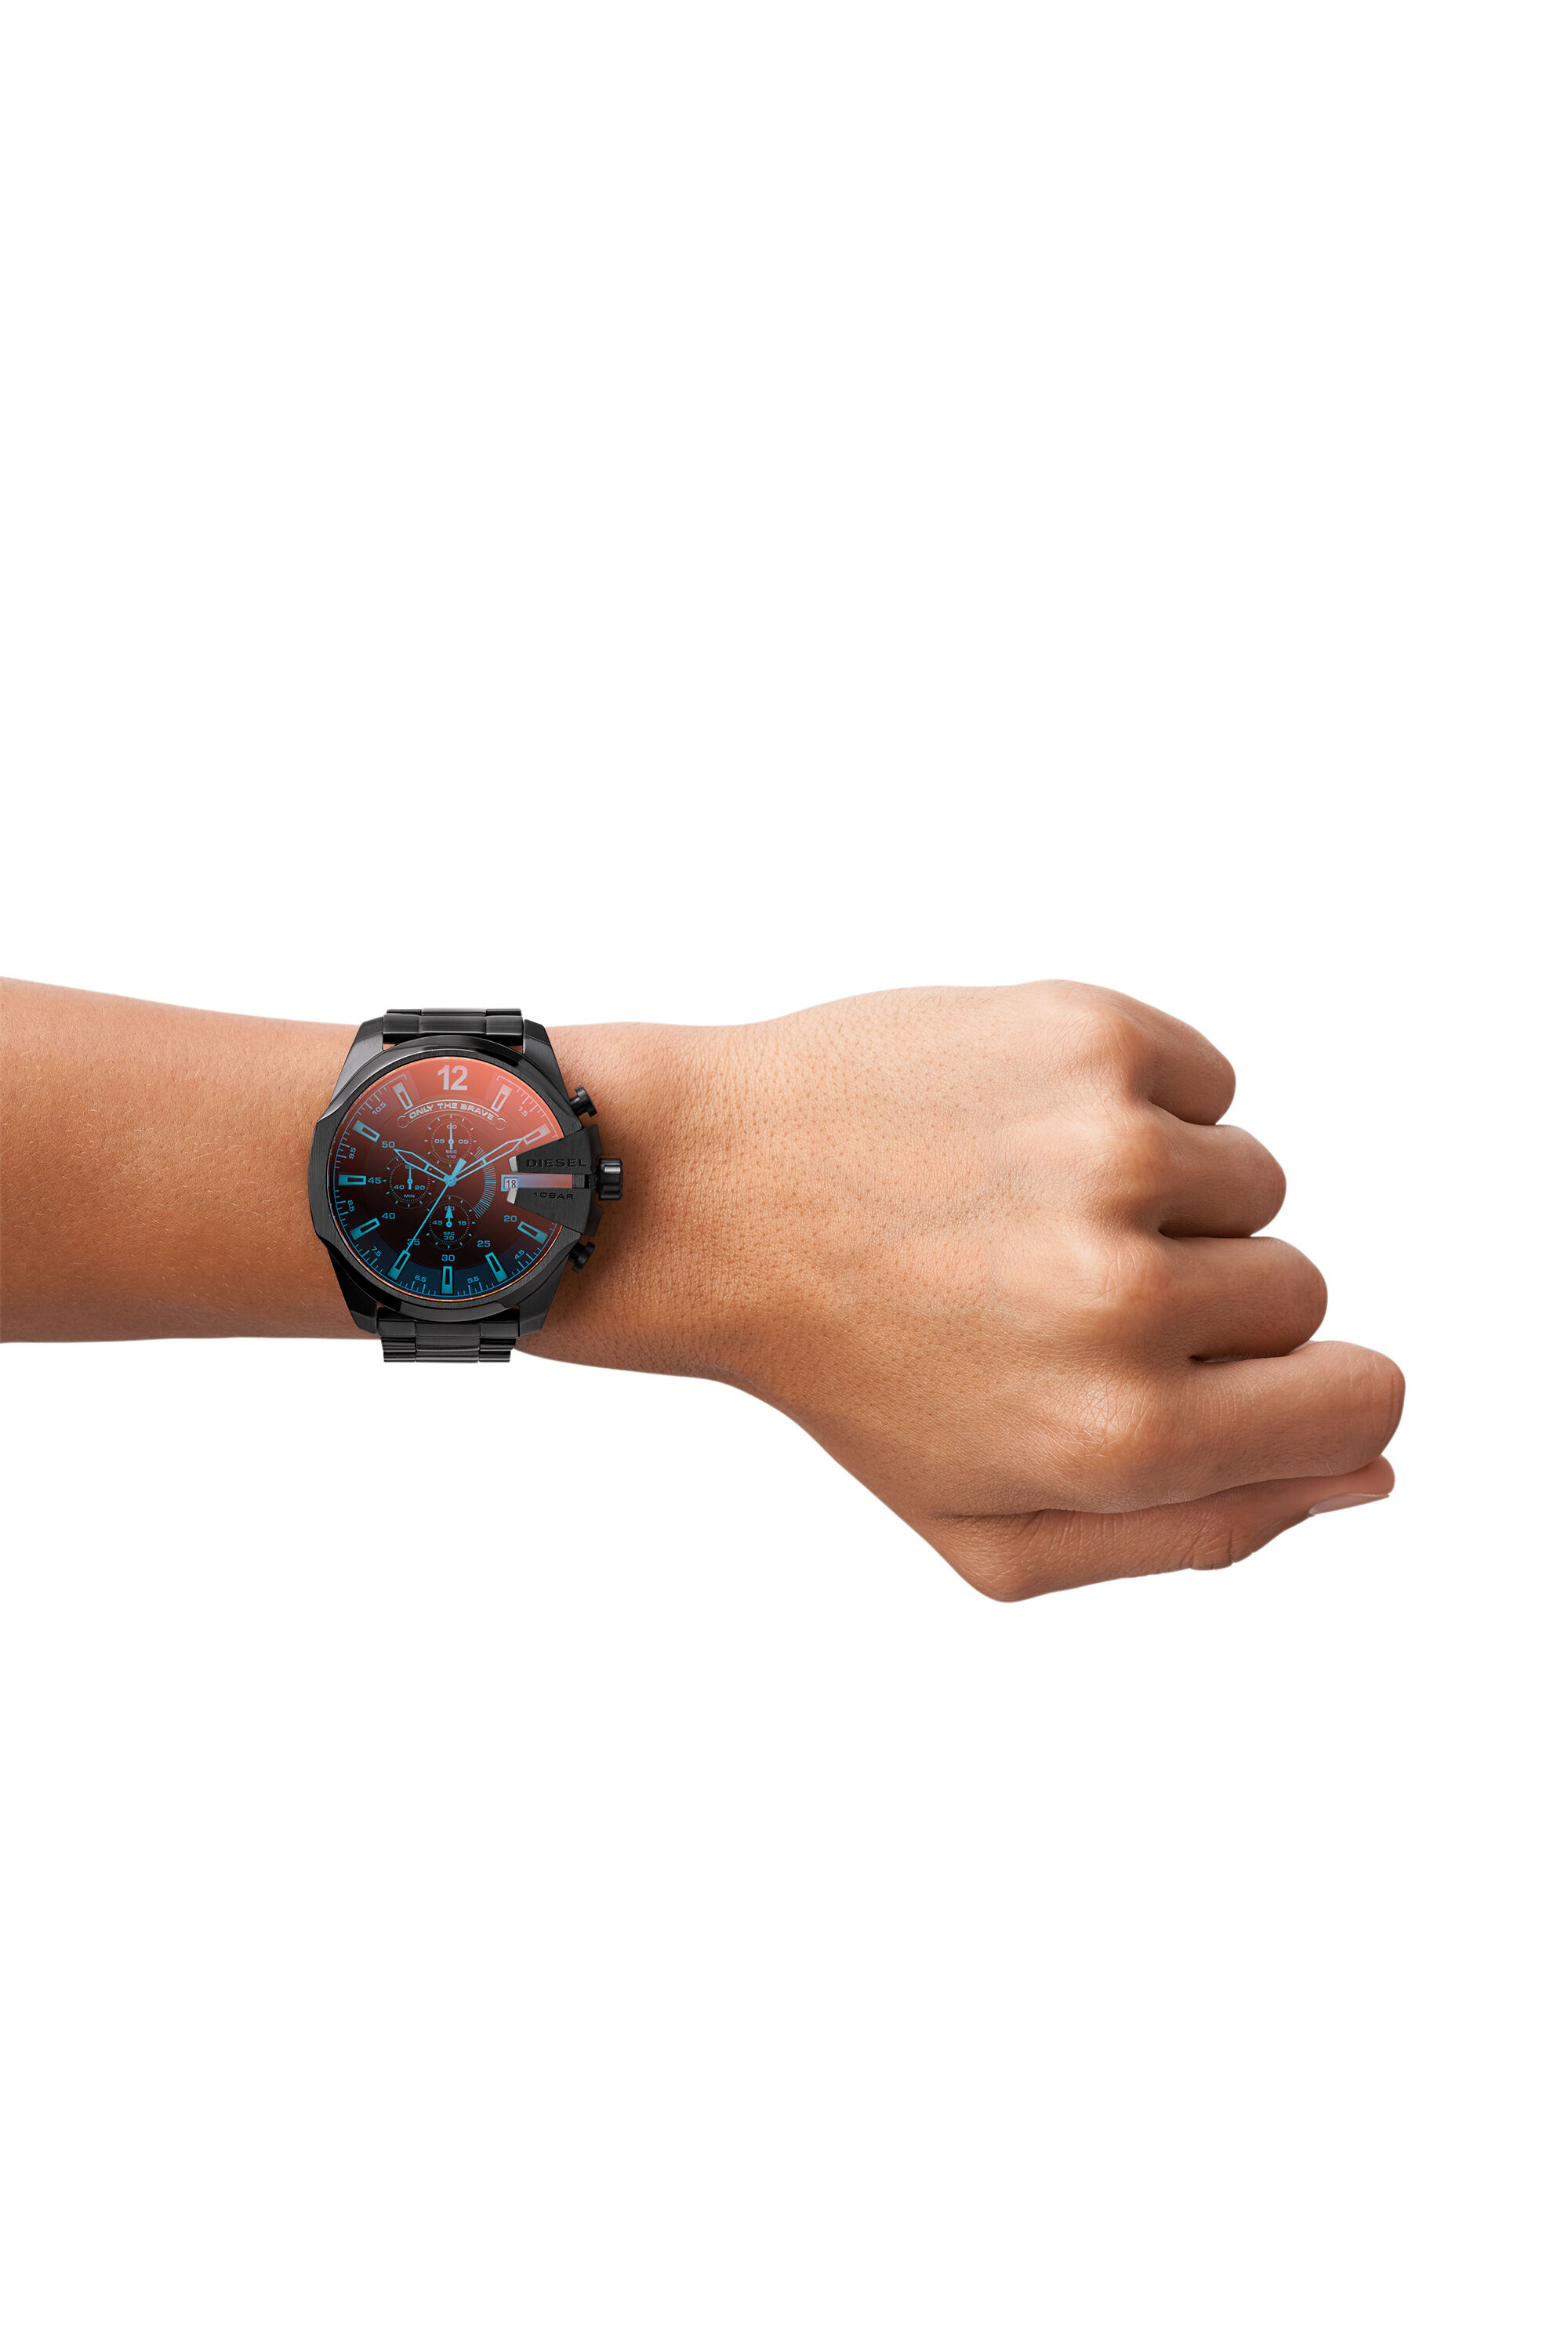 DIESEL(ディーゼル) 腕時計 Dz4318その他は新品同様綺麗な状態です